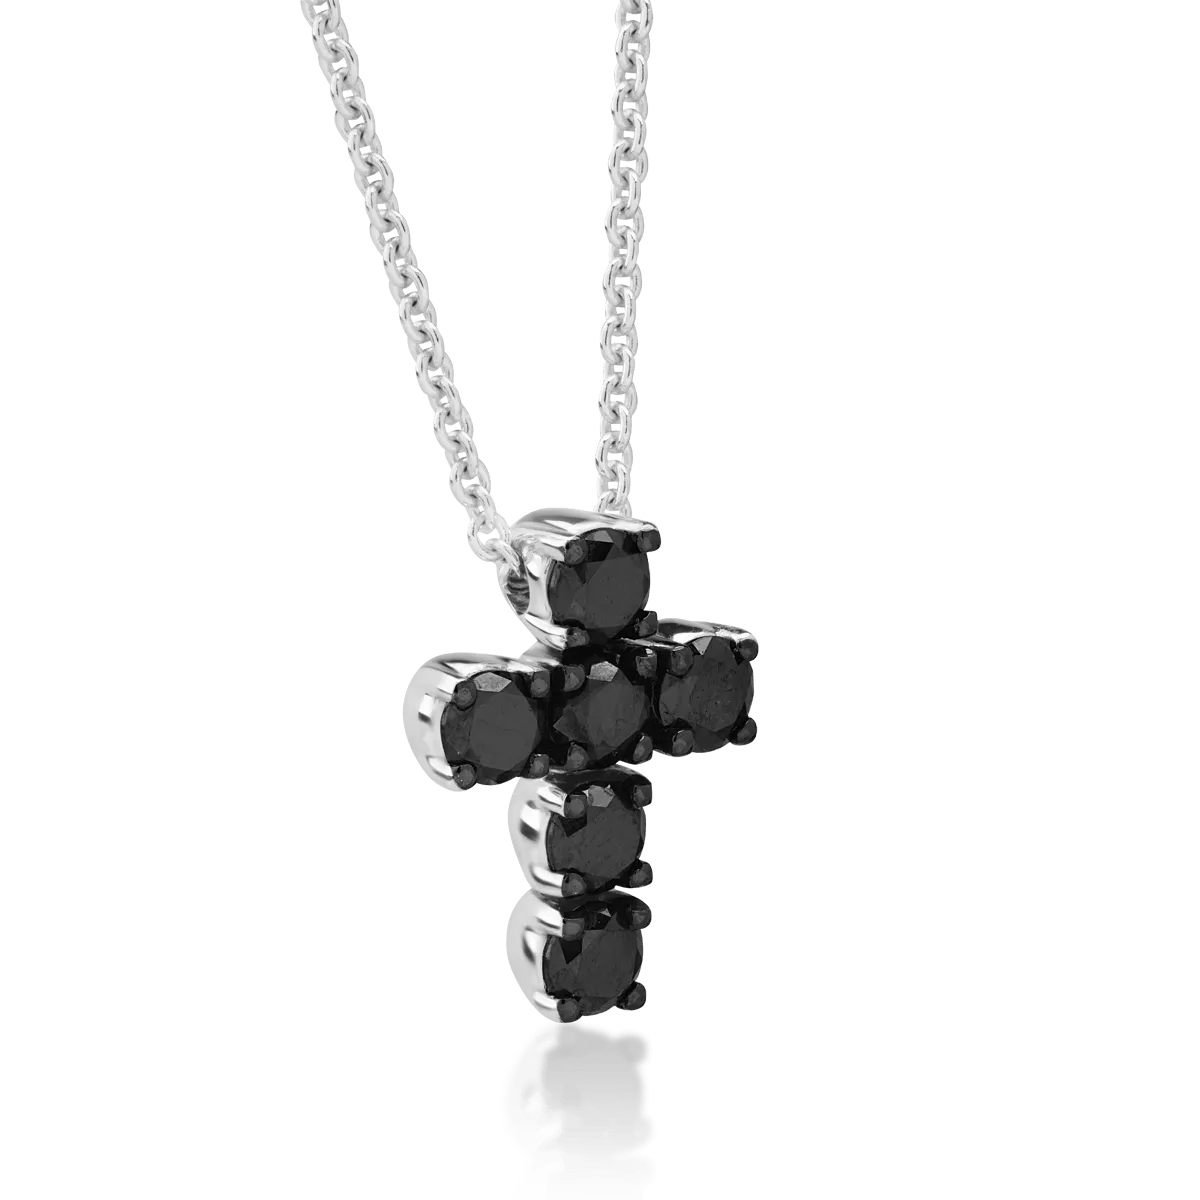 18K white gold cross pendant necklace with 0.64ct black diamonds